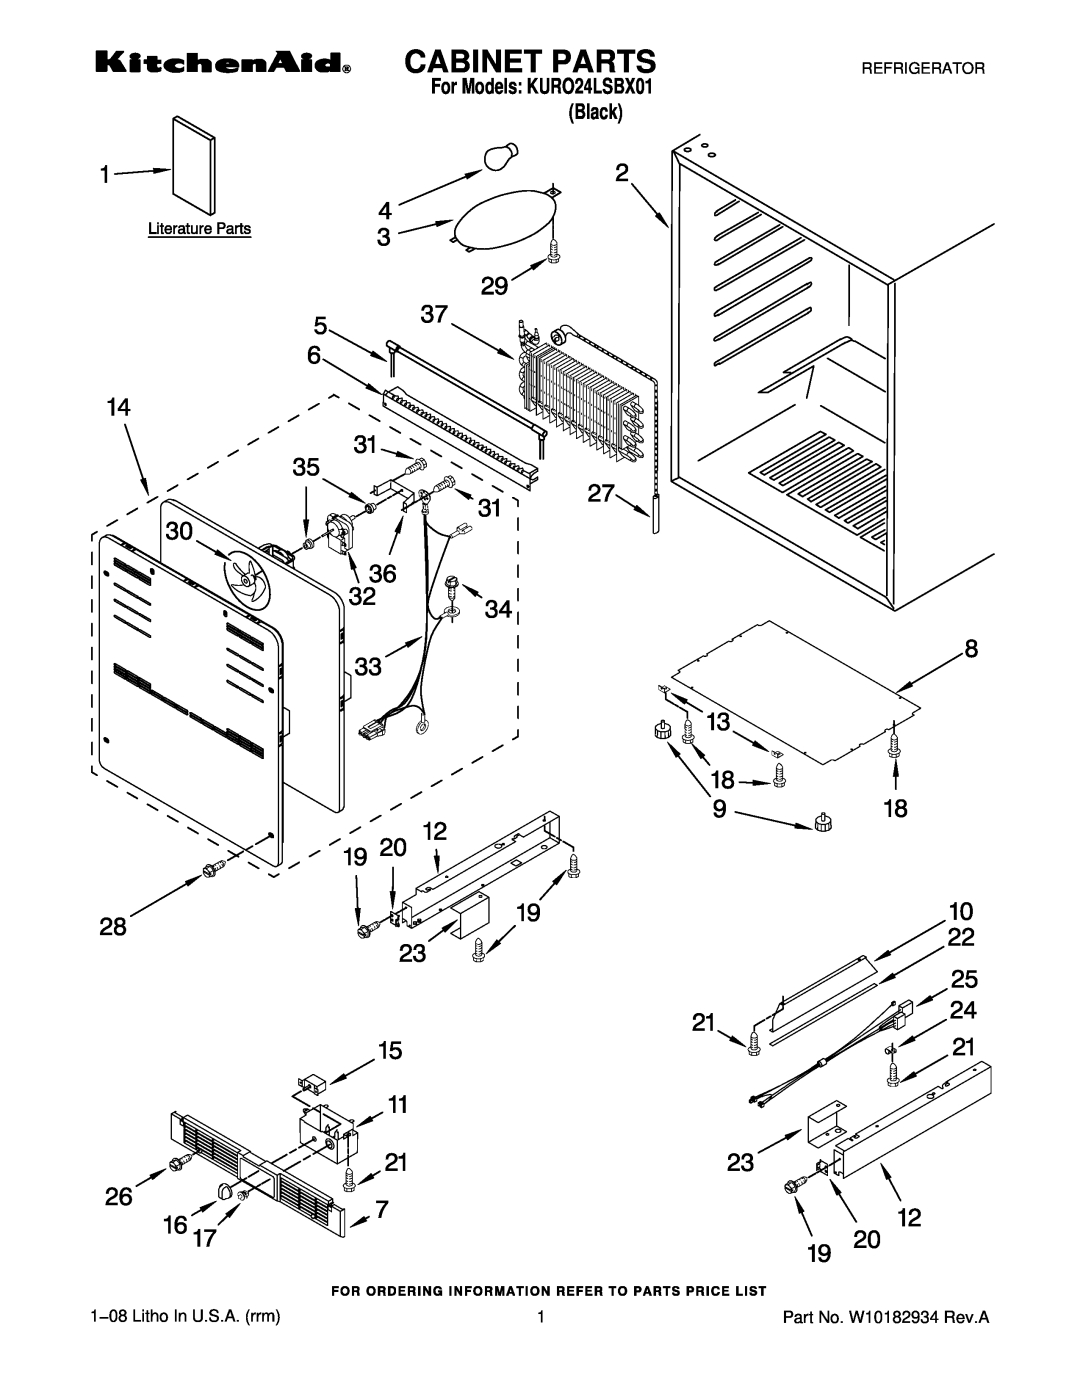 KitchenAid manual Cabinet Parts, 1−08 Litho In U.S.A. rrm, For Models KURO24LSBX01 Black, Refrigerator 